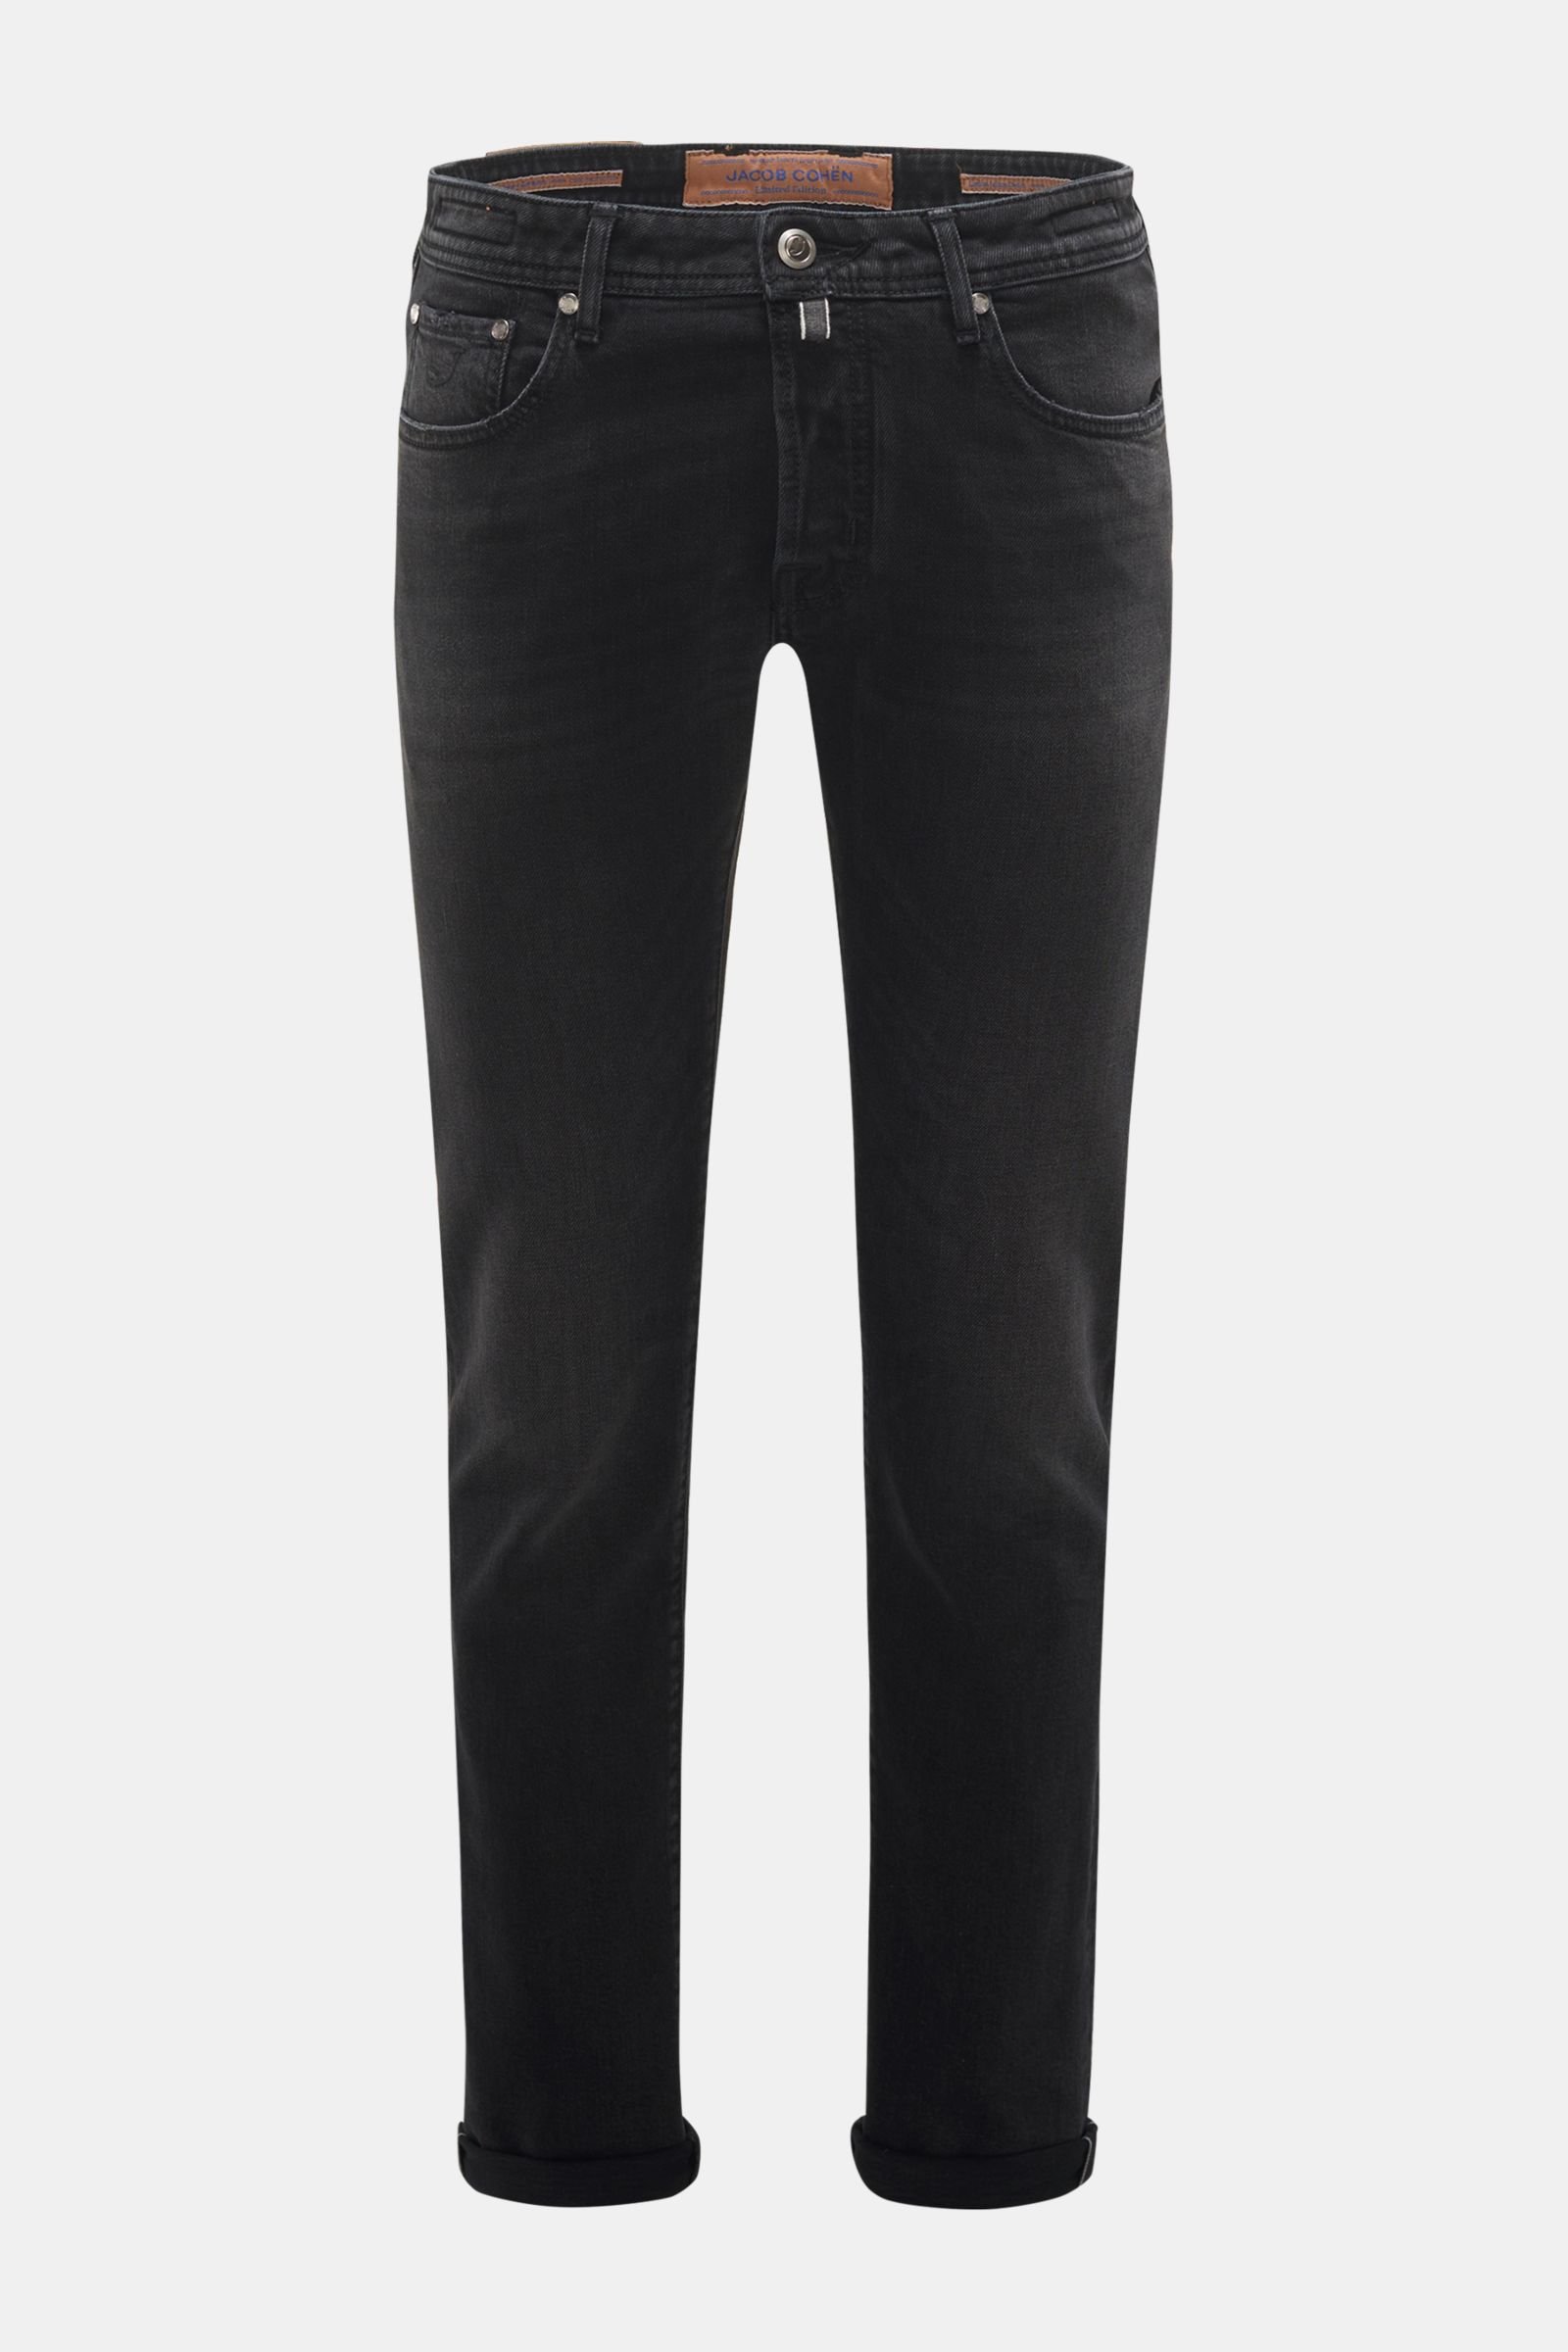 Jeans 'J688 Limited Comfort Slim Fit' anthracite